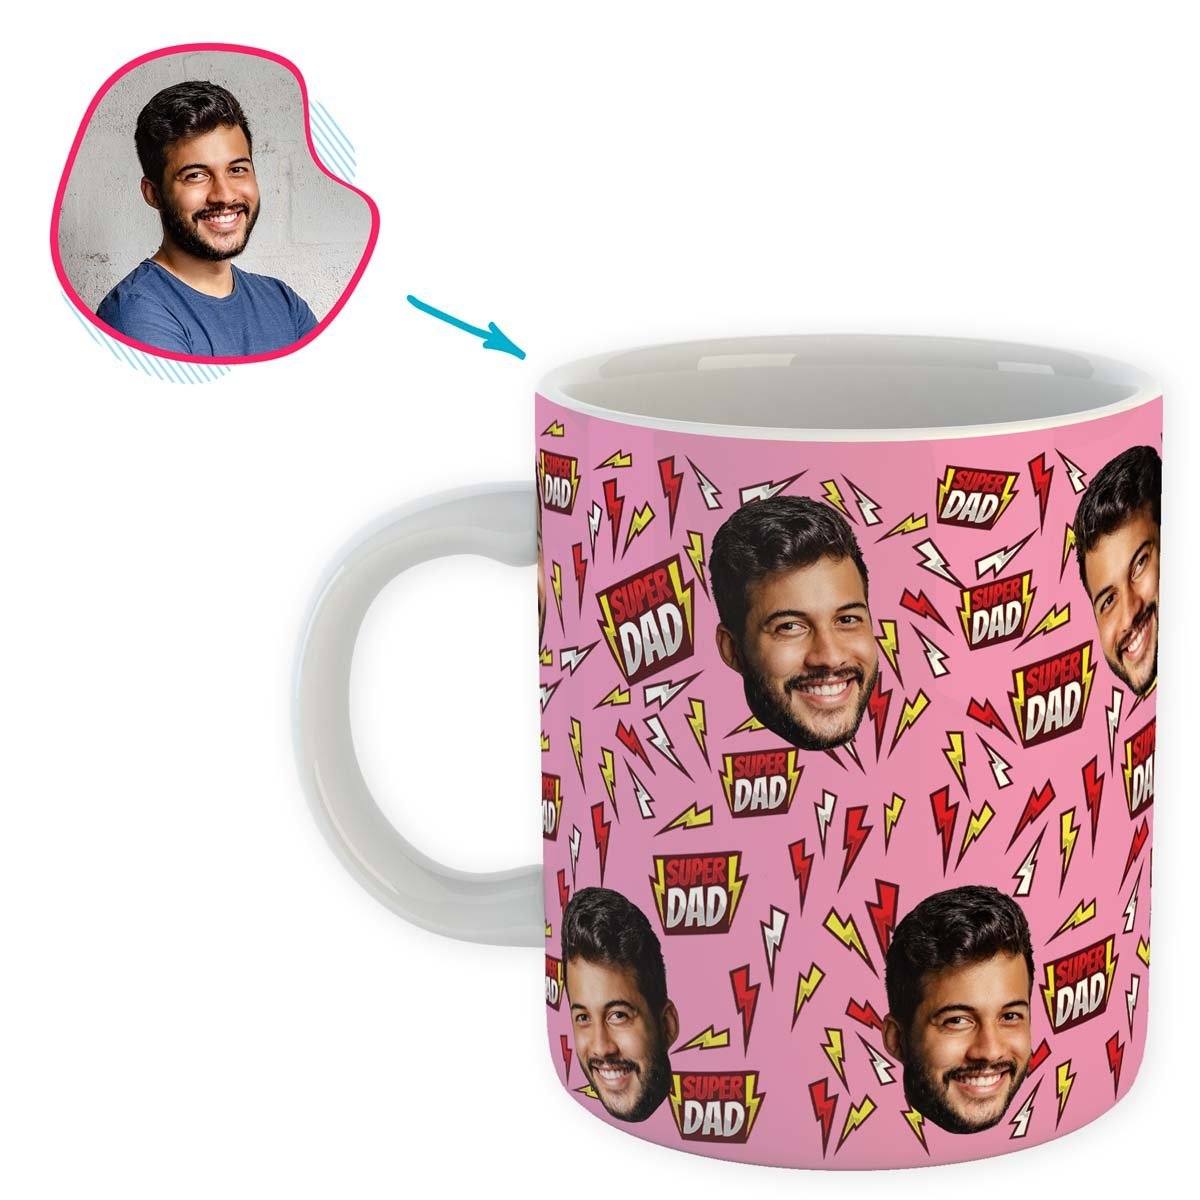 Super Dad Personalized Mug